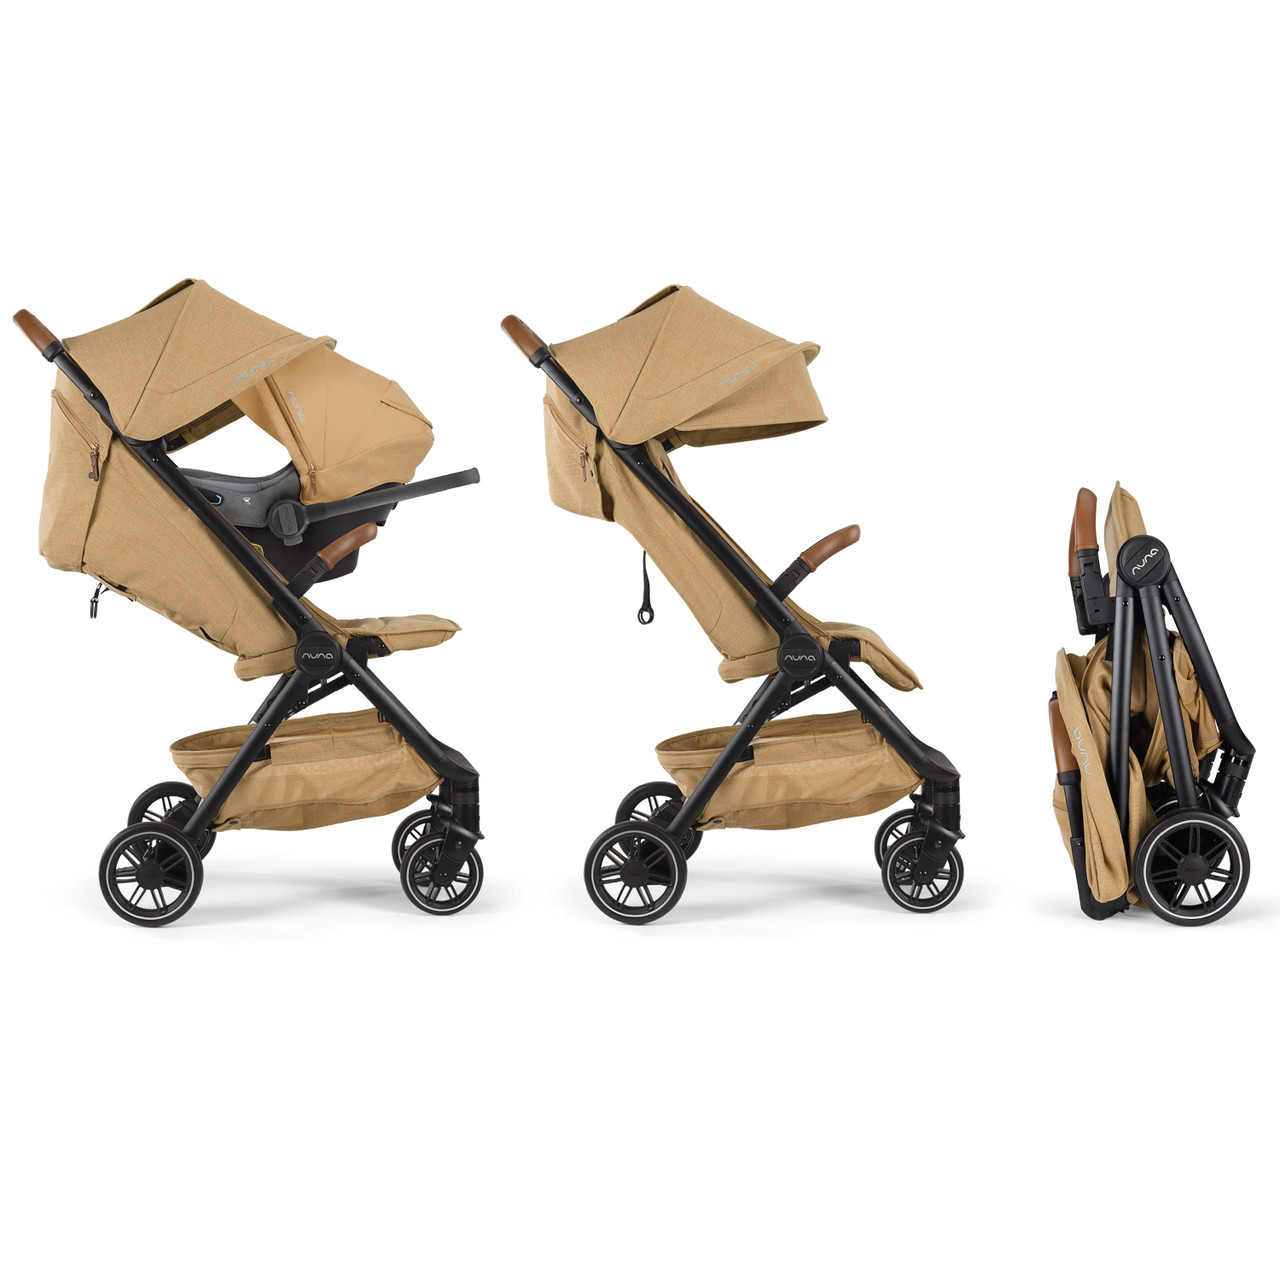 Nuna trvl LIght Brown Compact Lightweight Travel Baby Stroller +